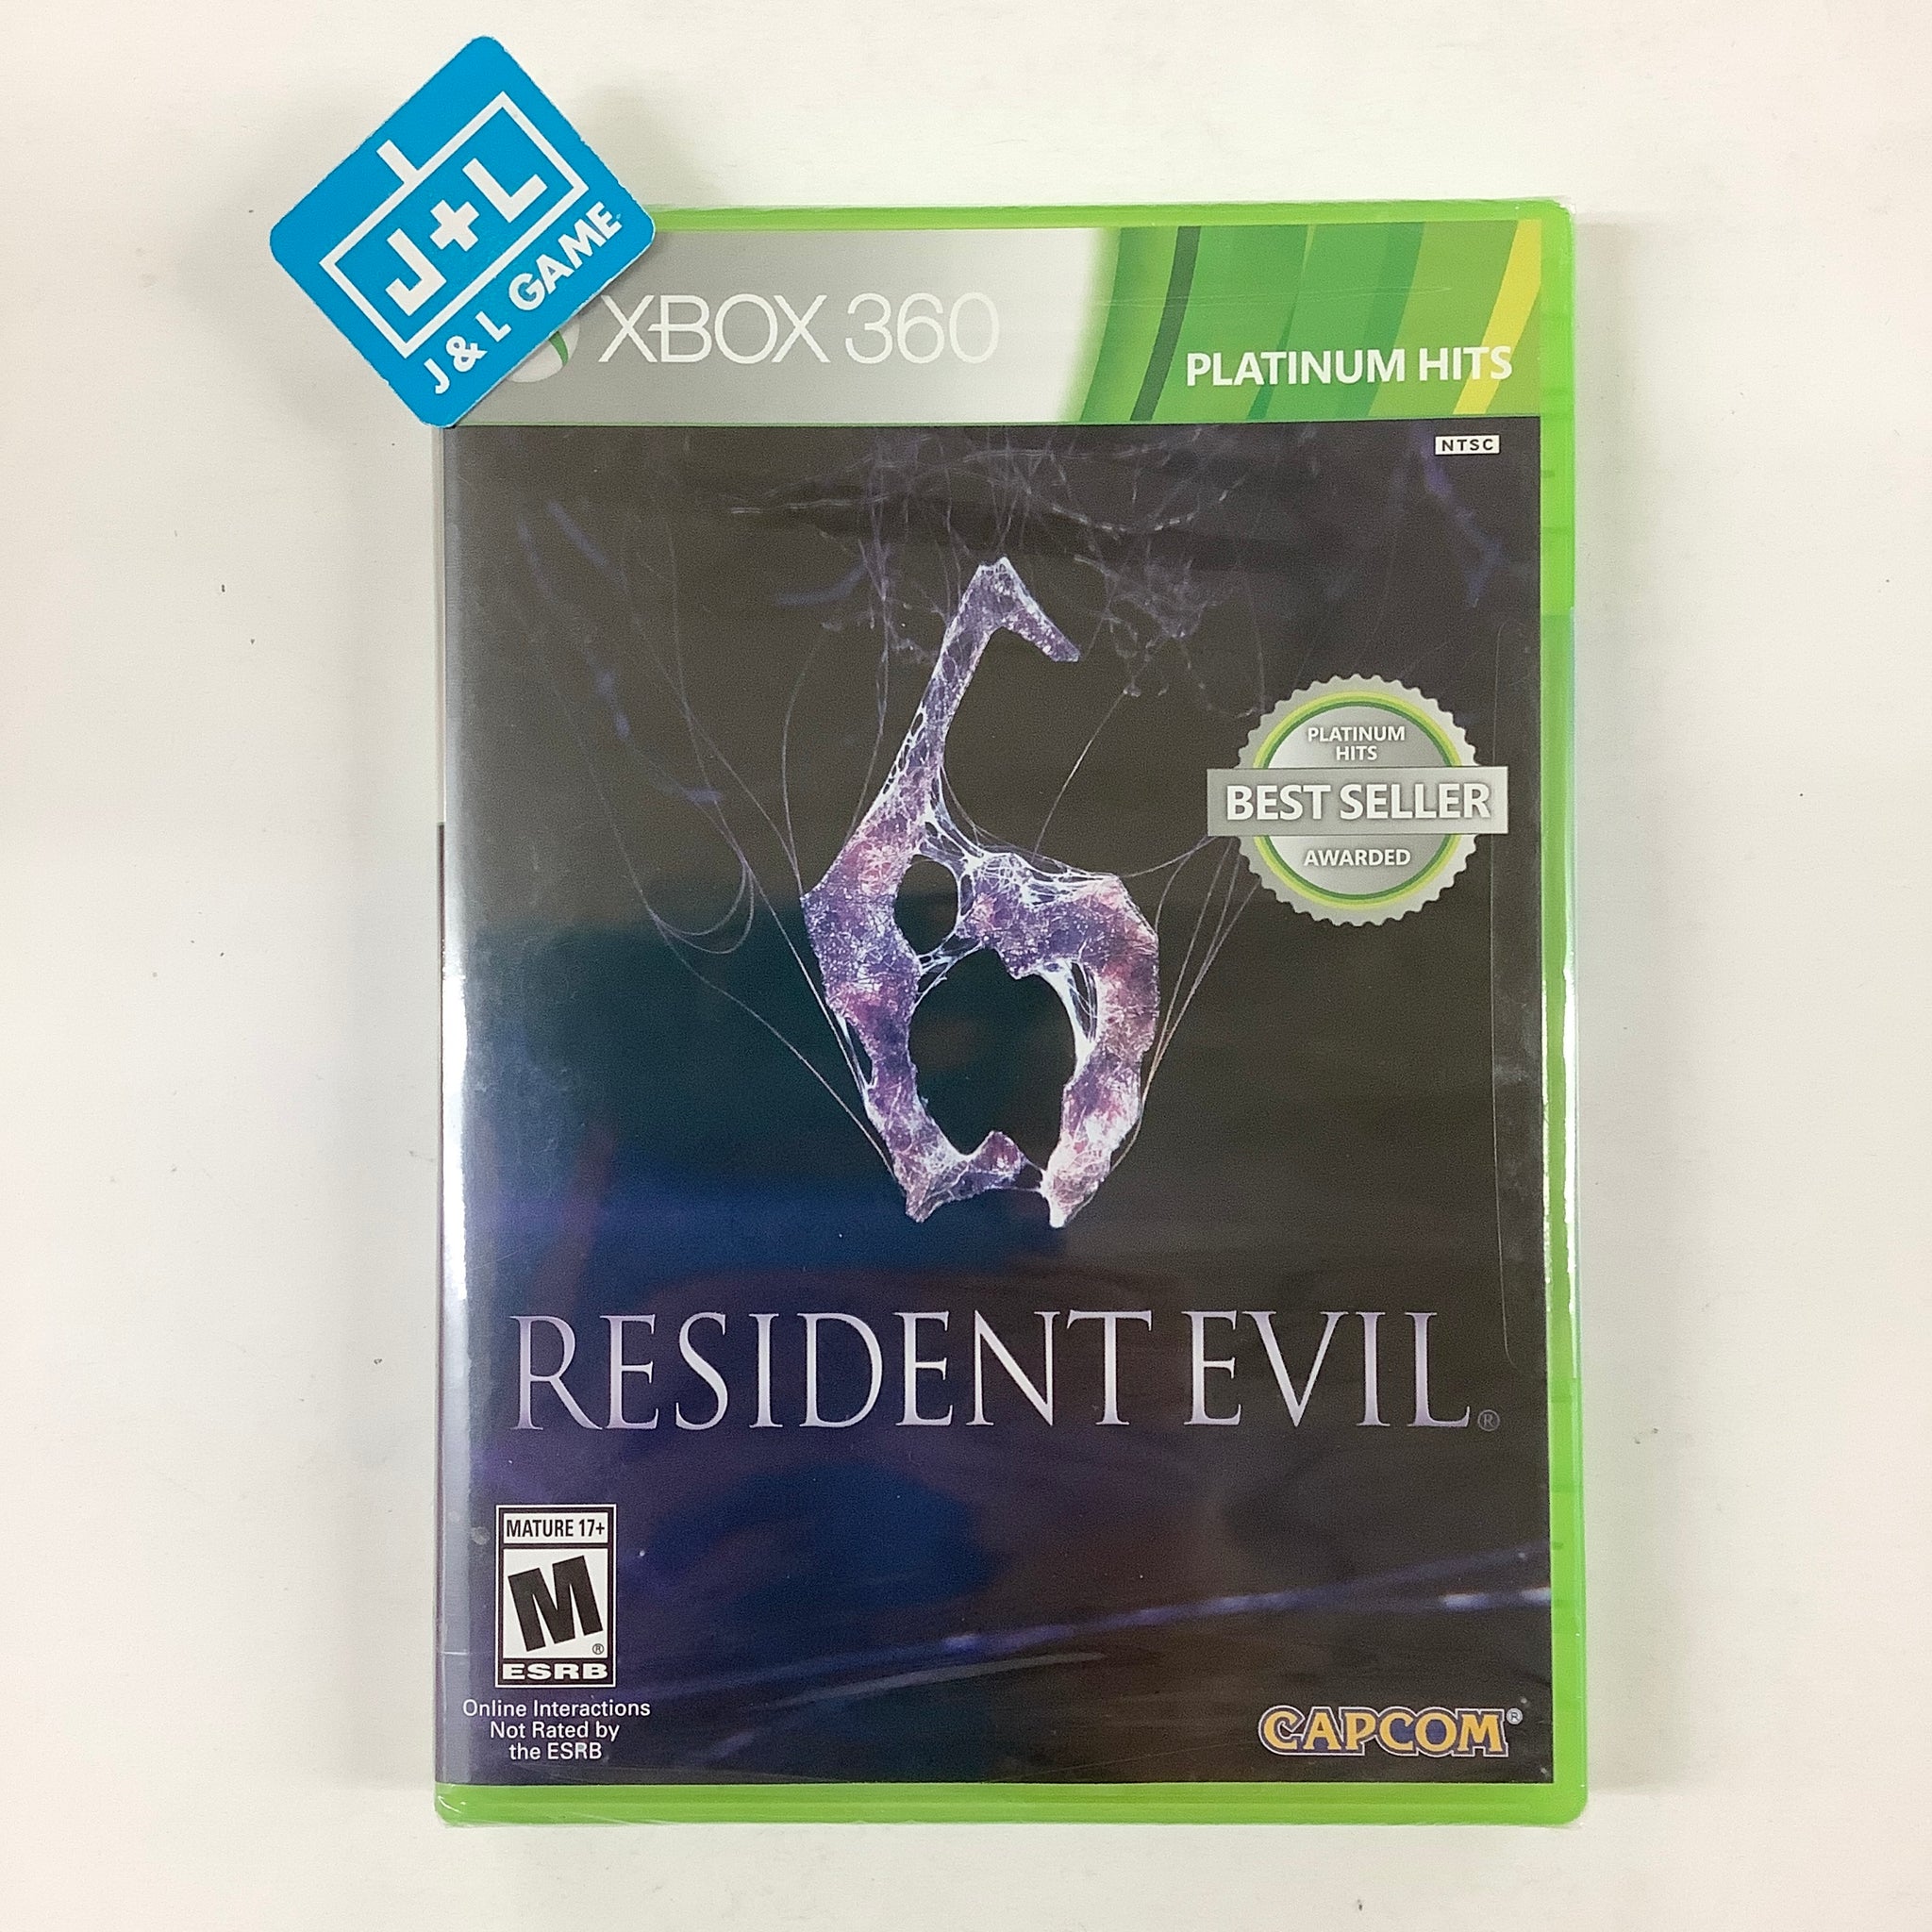 Resident Evil 6 Standard Edition Capcom Xbox One Digital